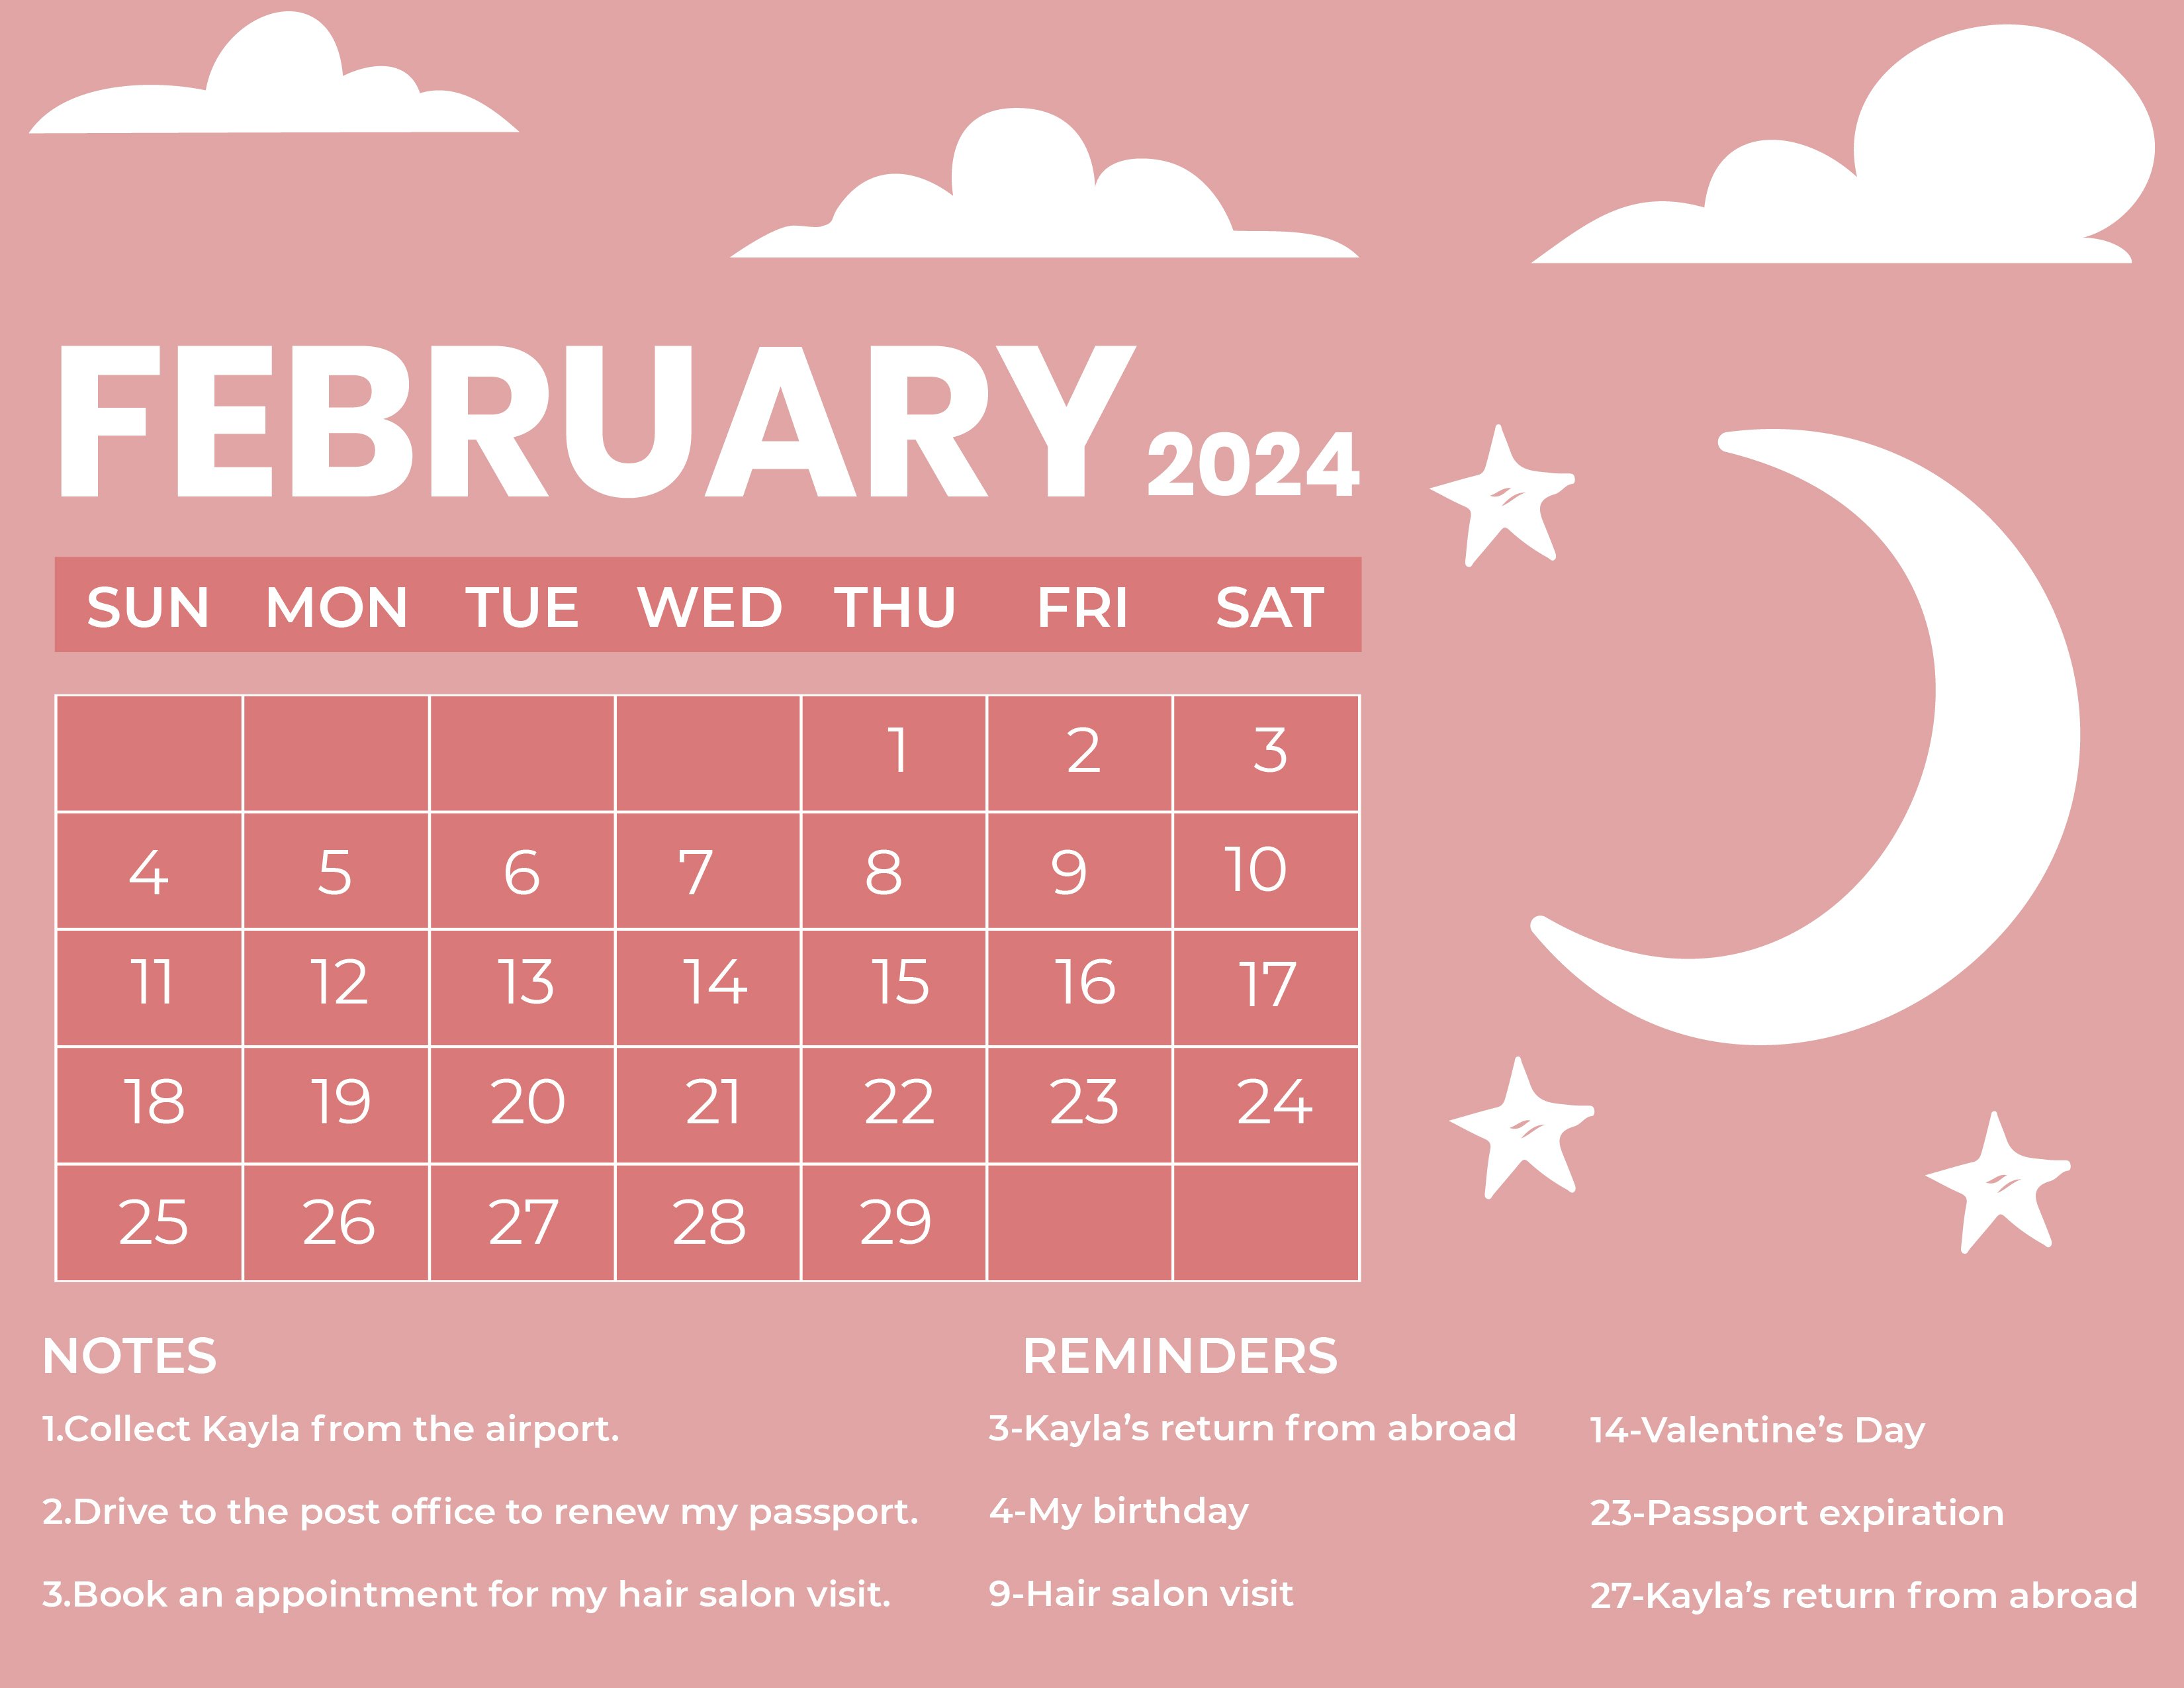 February 2024 Monthly Calendar Download in Word, Illustrator, EPS